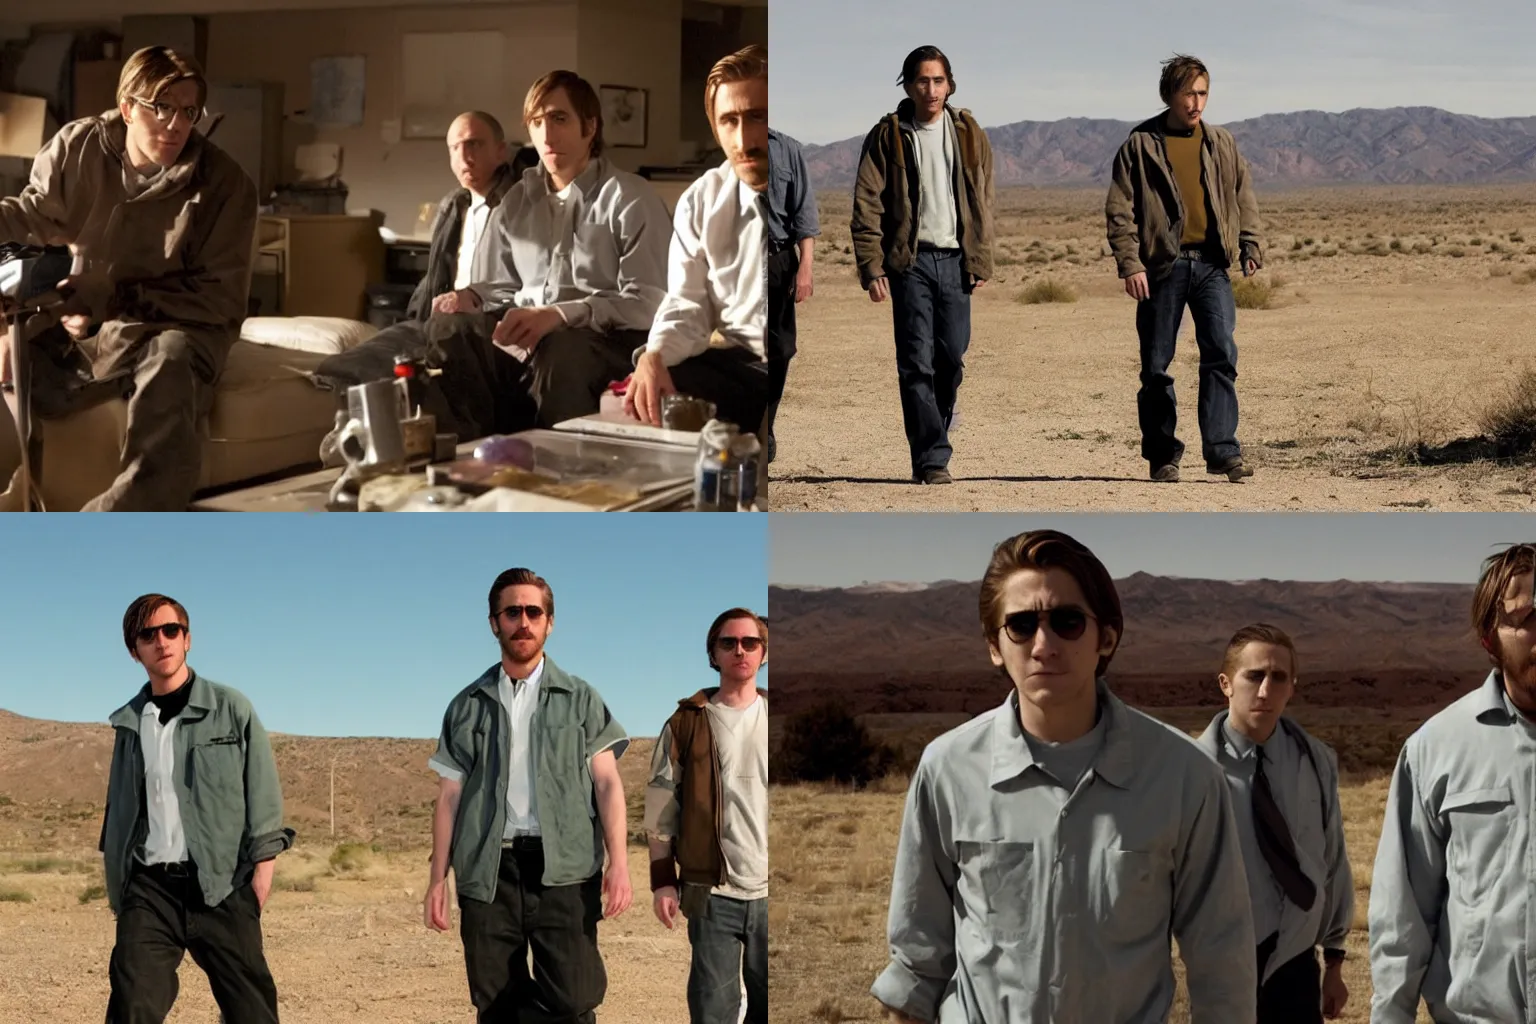 Prompt: Jake Gyllenhaal, Paul Dano, and Ryan Gosling in Breaking Bad (2008), film still